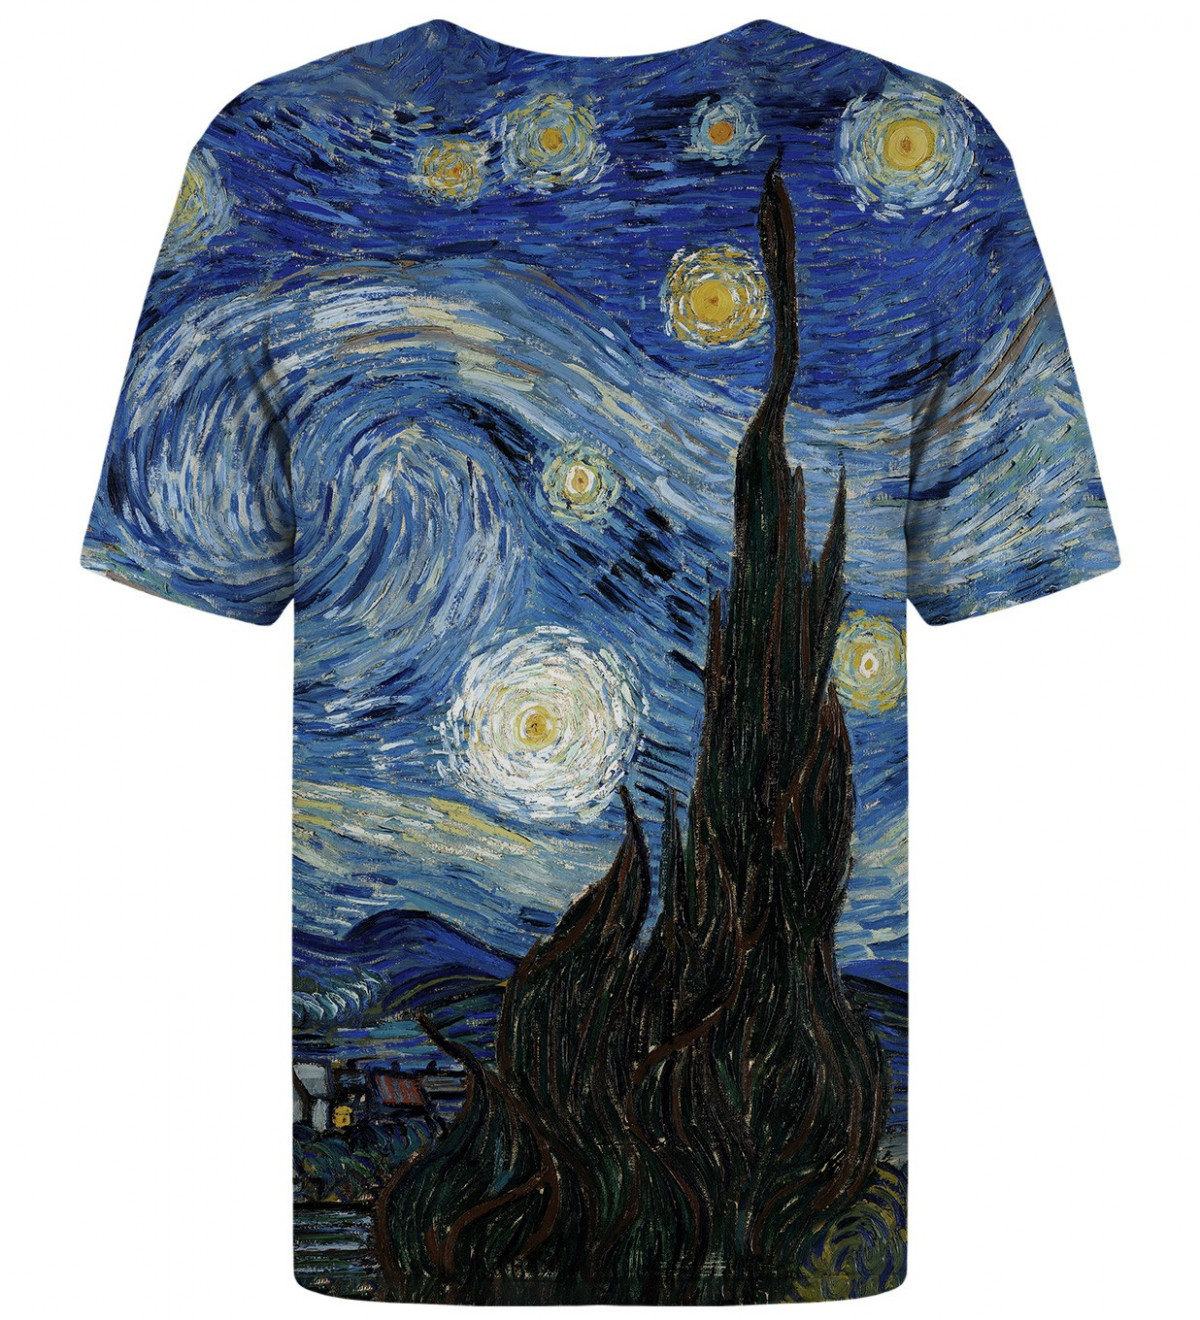 the starry night shirt